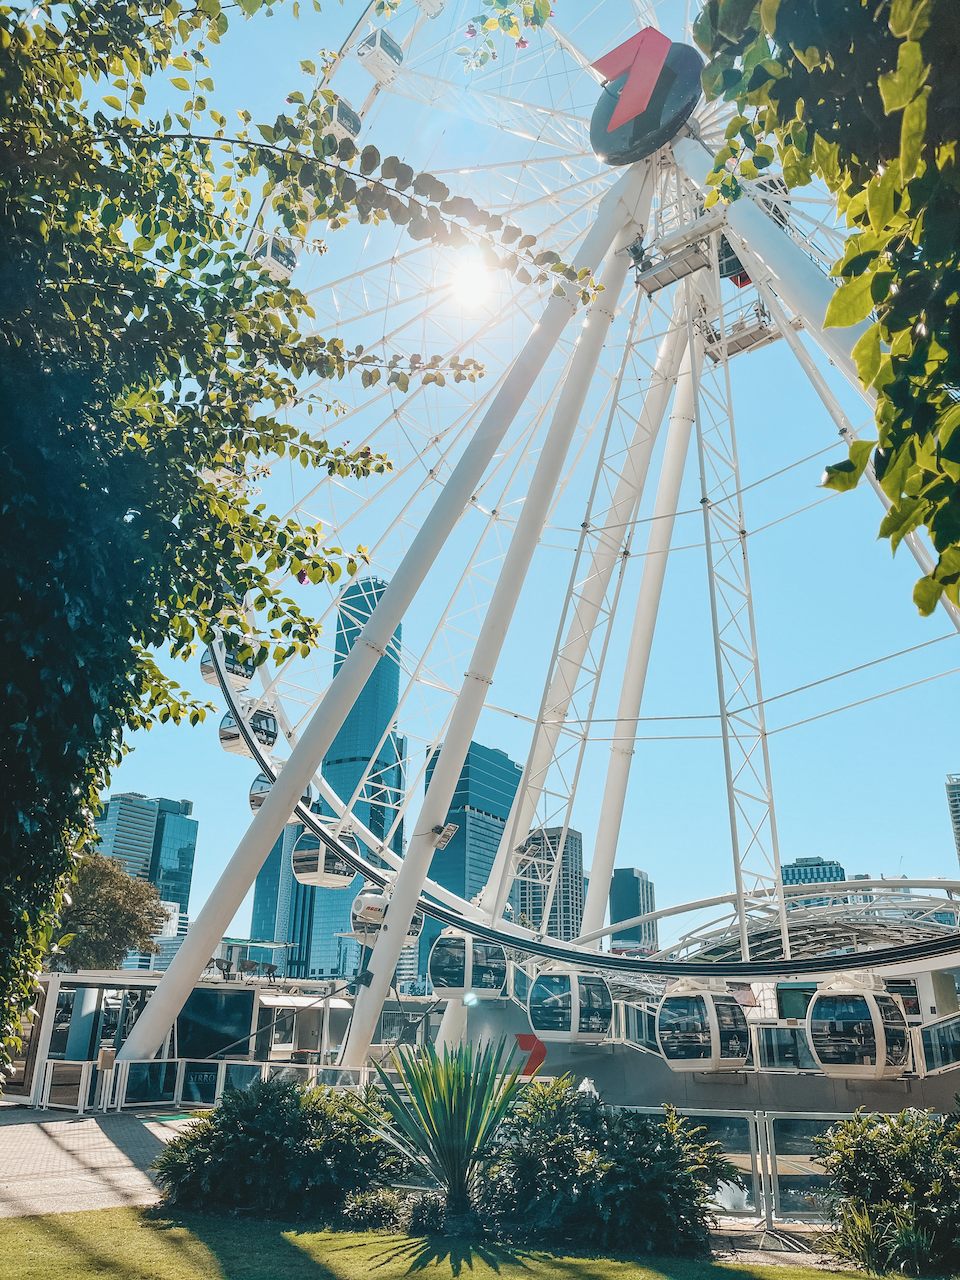 The Wheel of Brisbane - Queensland - Australia